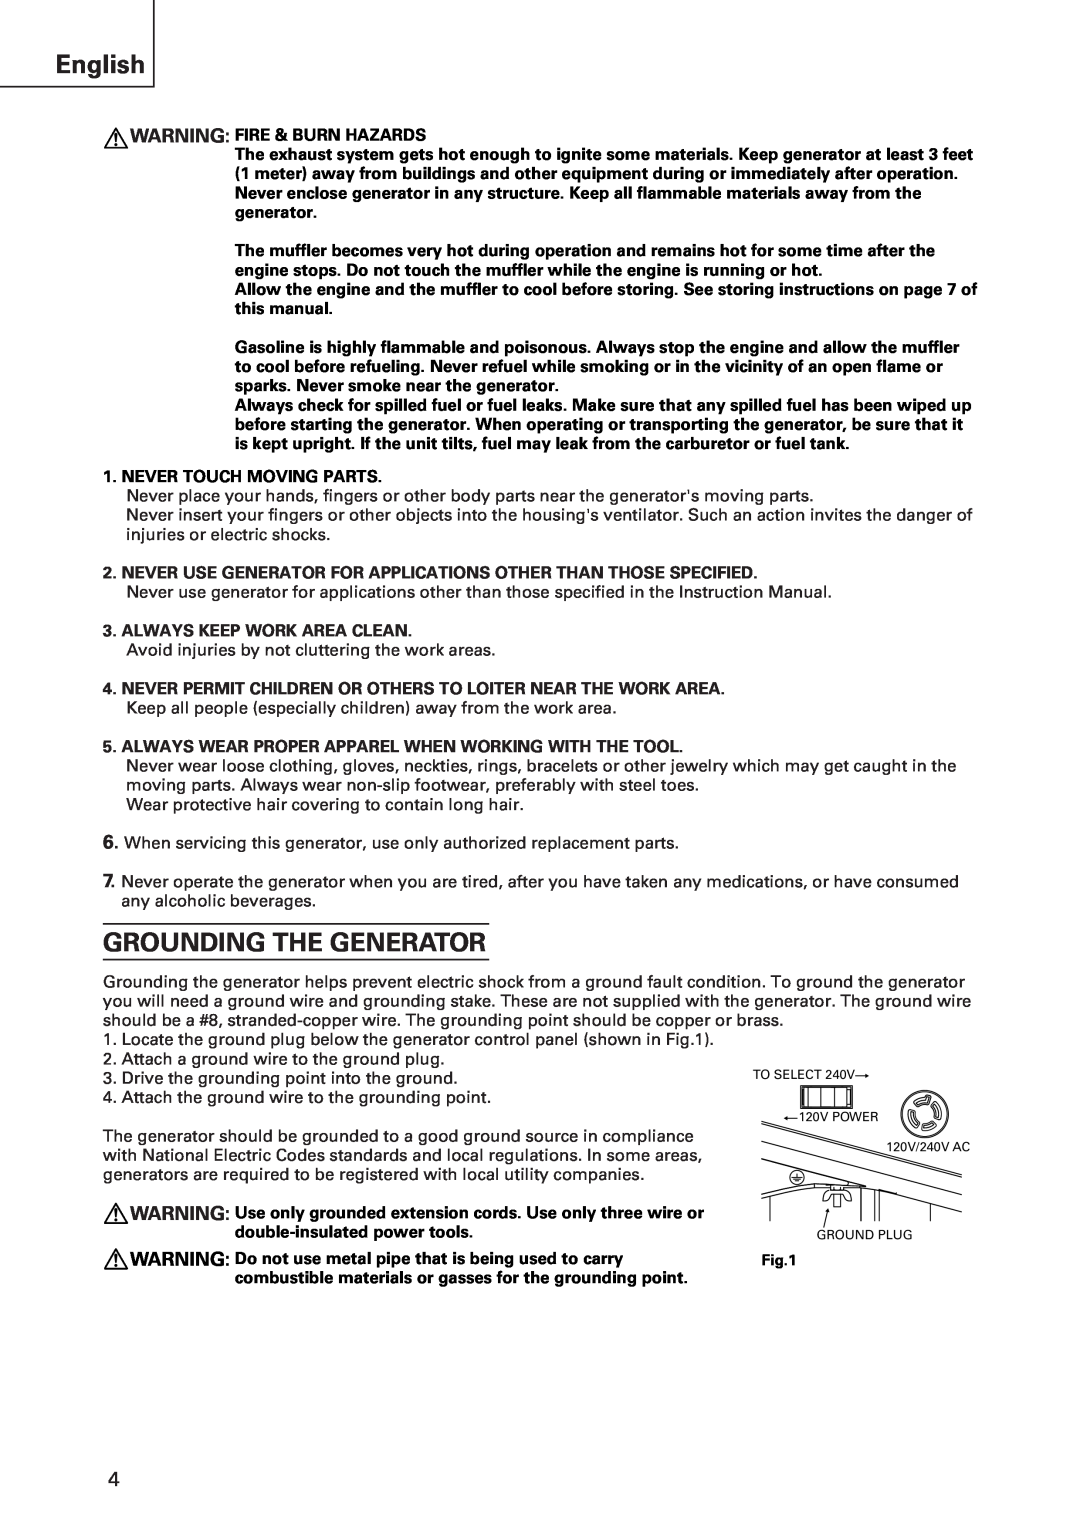 Hitachi E43 instruction manual English, Grounding The Generator 